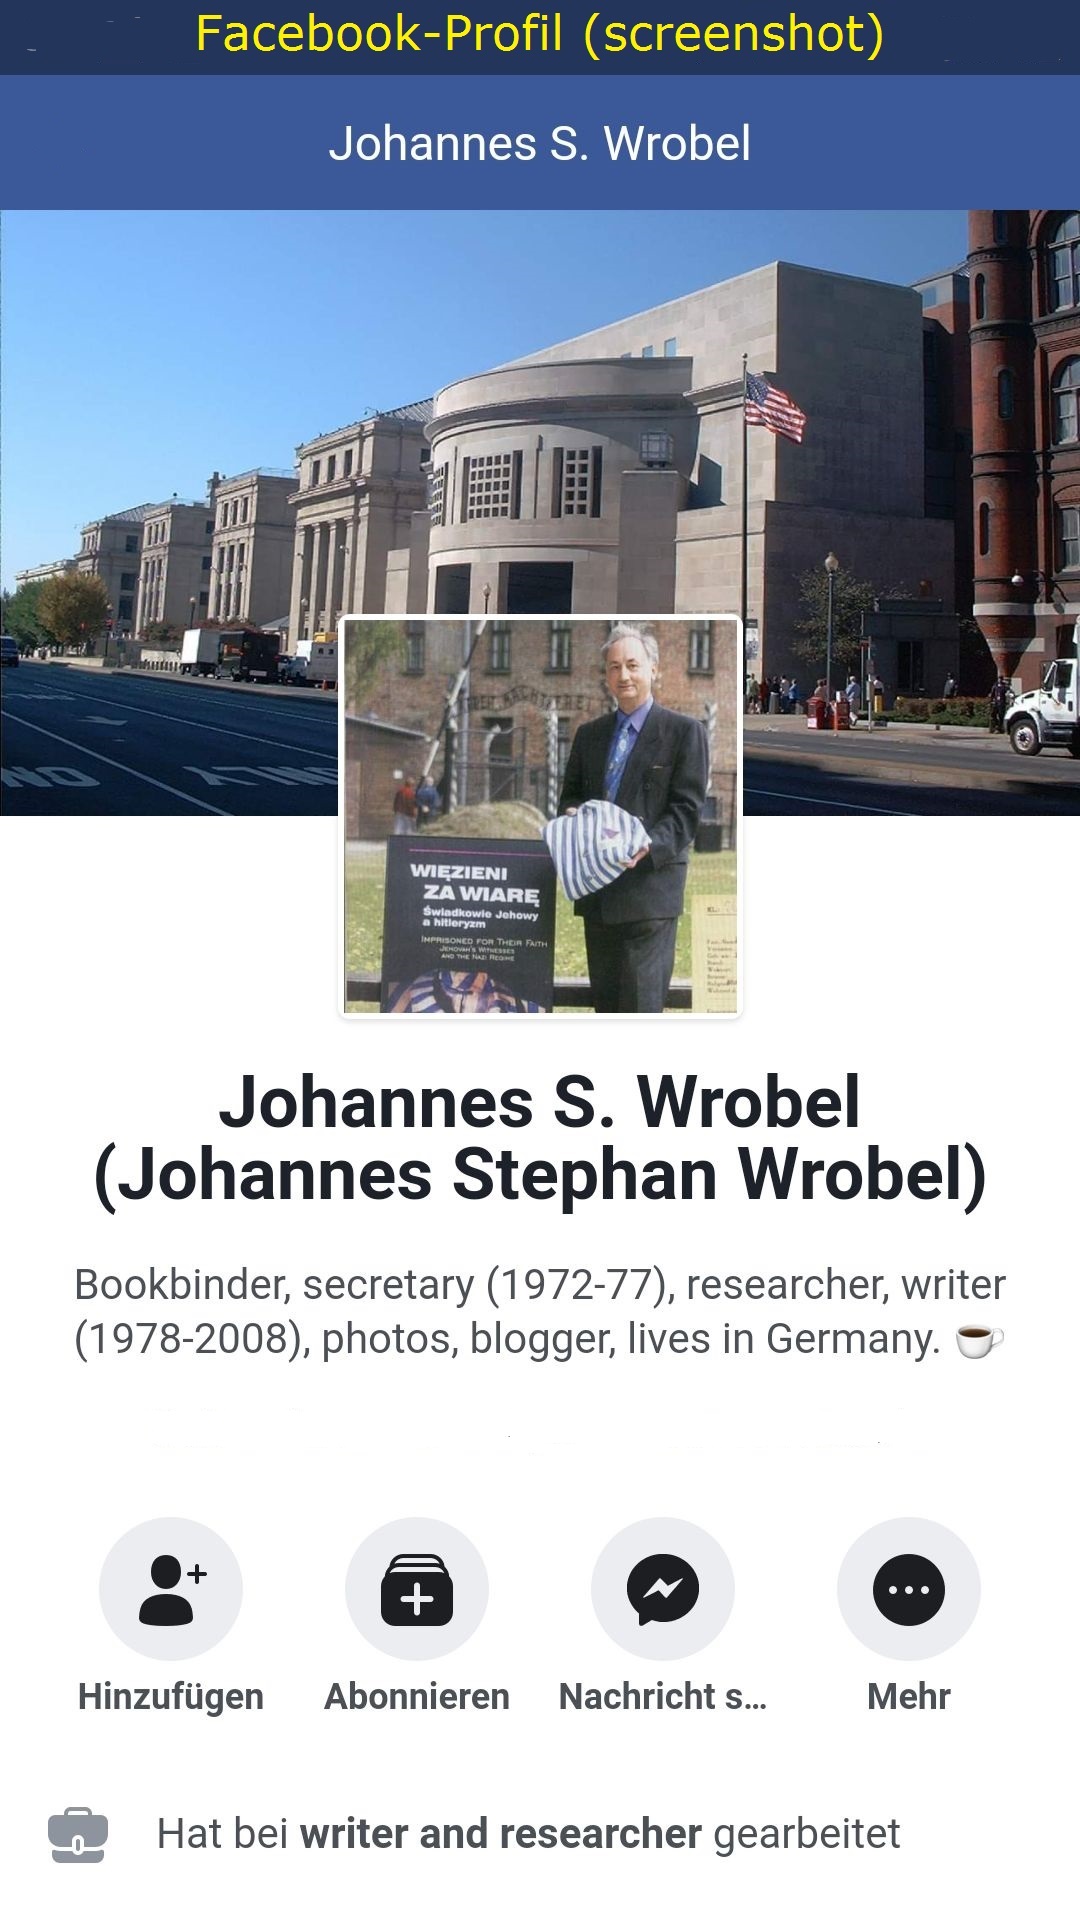 Facebook-Profil "Johannes Stephan Wrobel" (Johannes S. Wrobel)